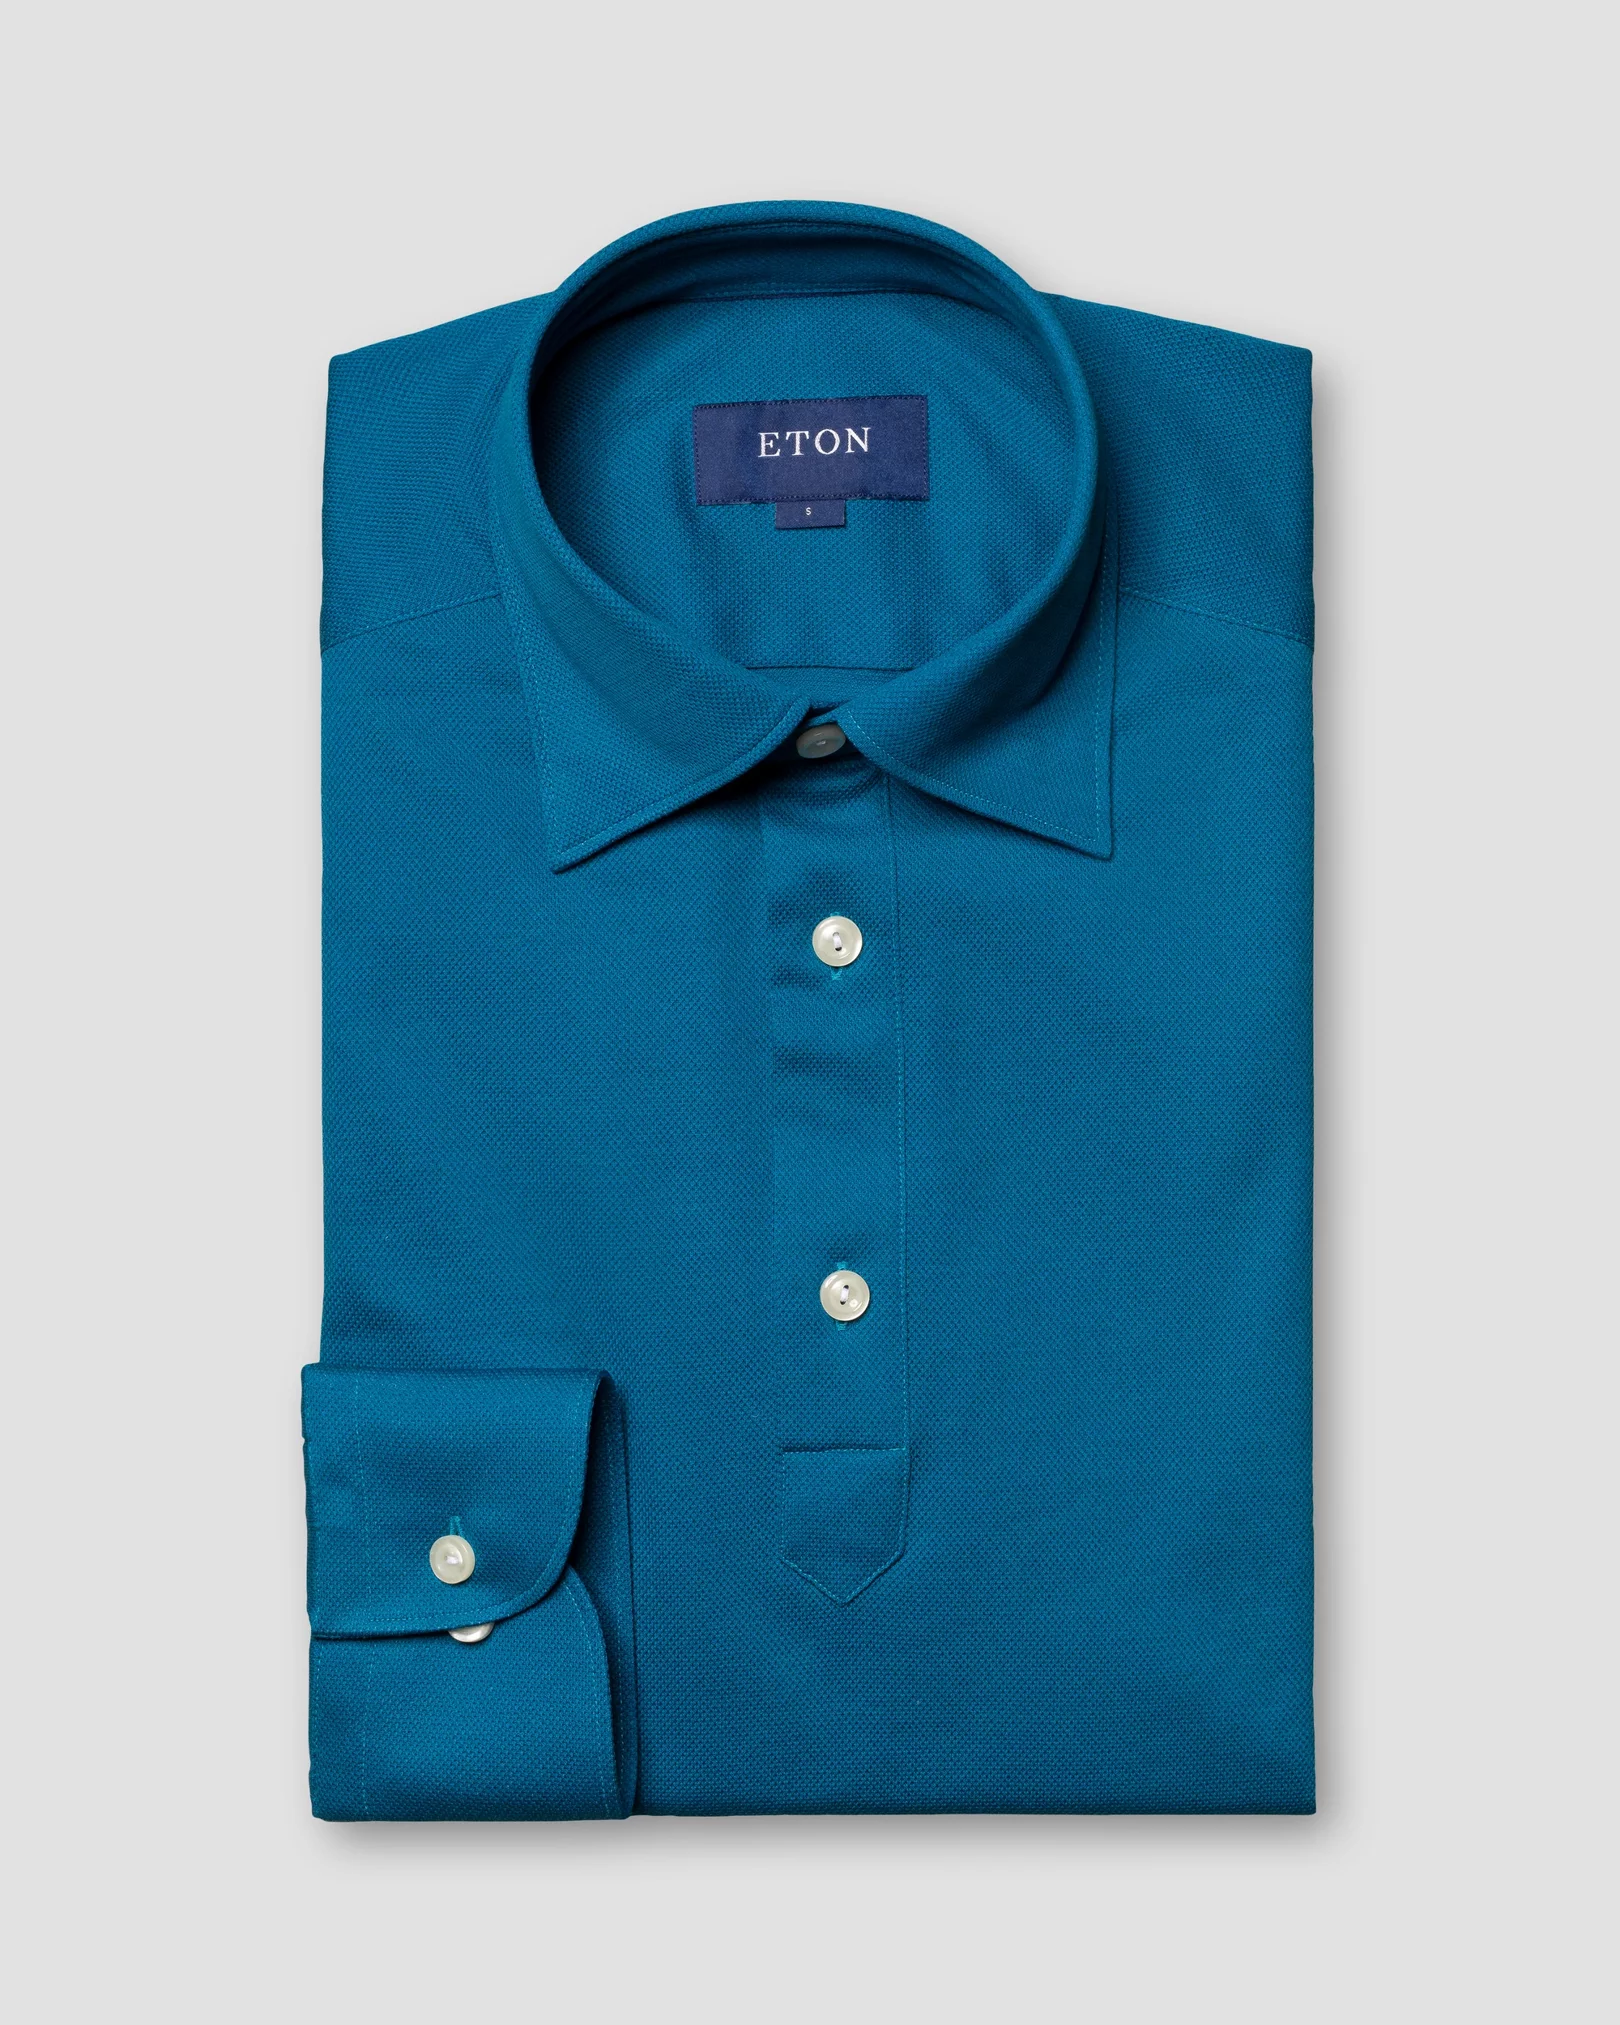 Eton - teal polo shirt long sleeved